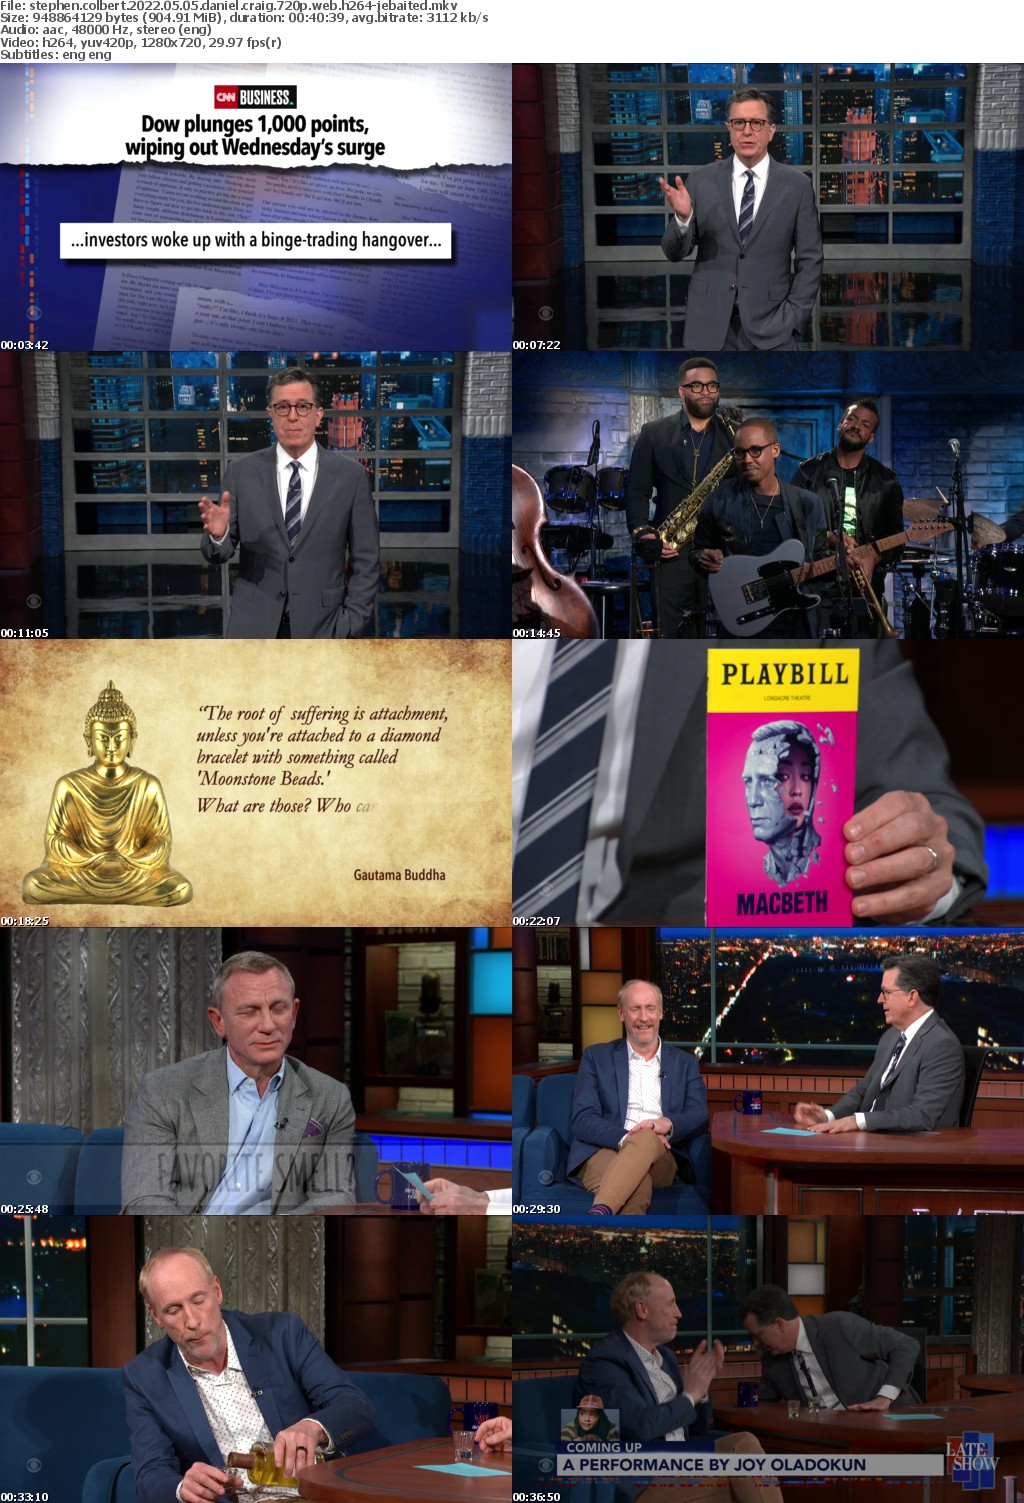 Stephen Colbert 2022 05 05 Daniel Craig 720p WEB H264-JEBAITED